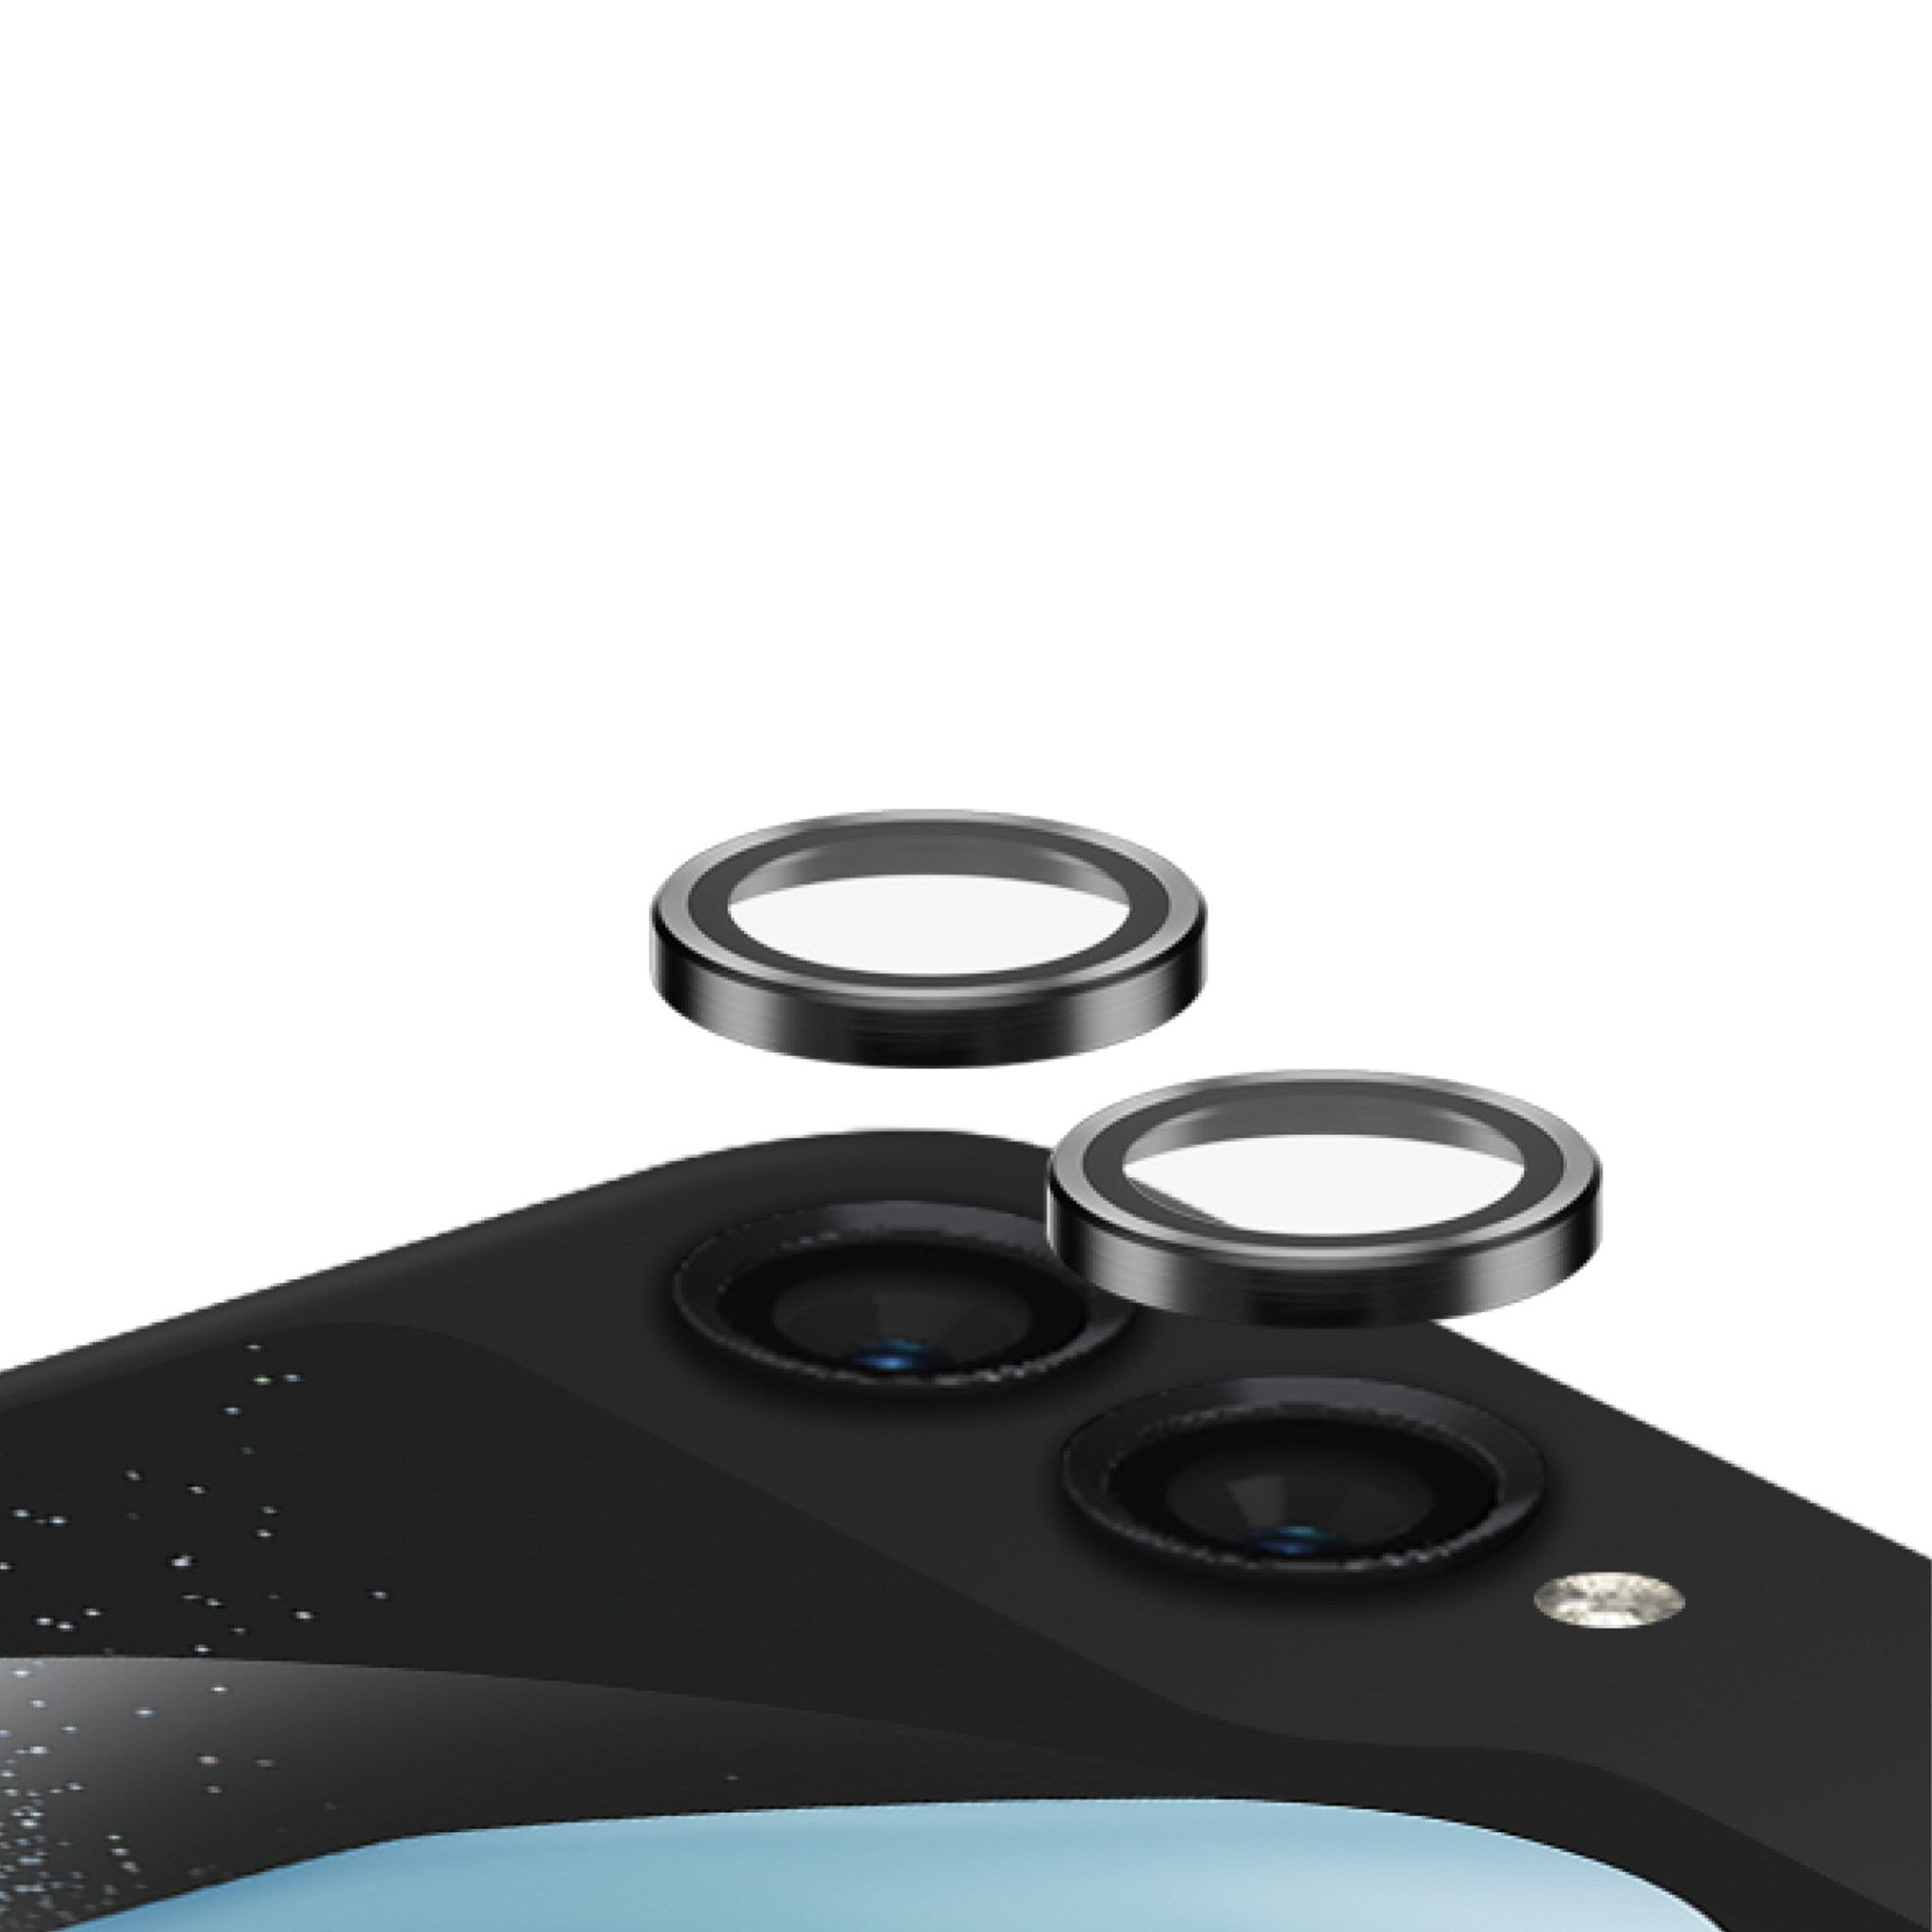 Kameraschutz Samsung Hoops™ Z 5) Galaxy Kameraschutz(für Flip PANZERGLASS